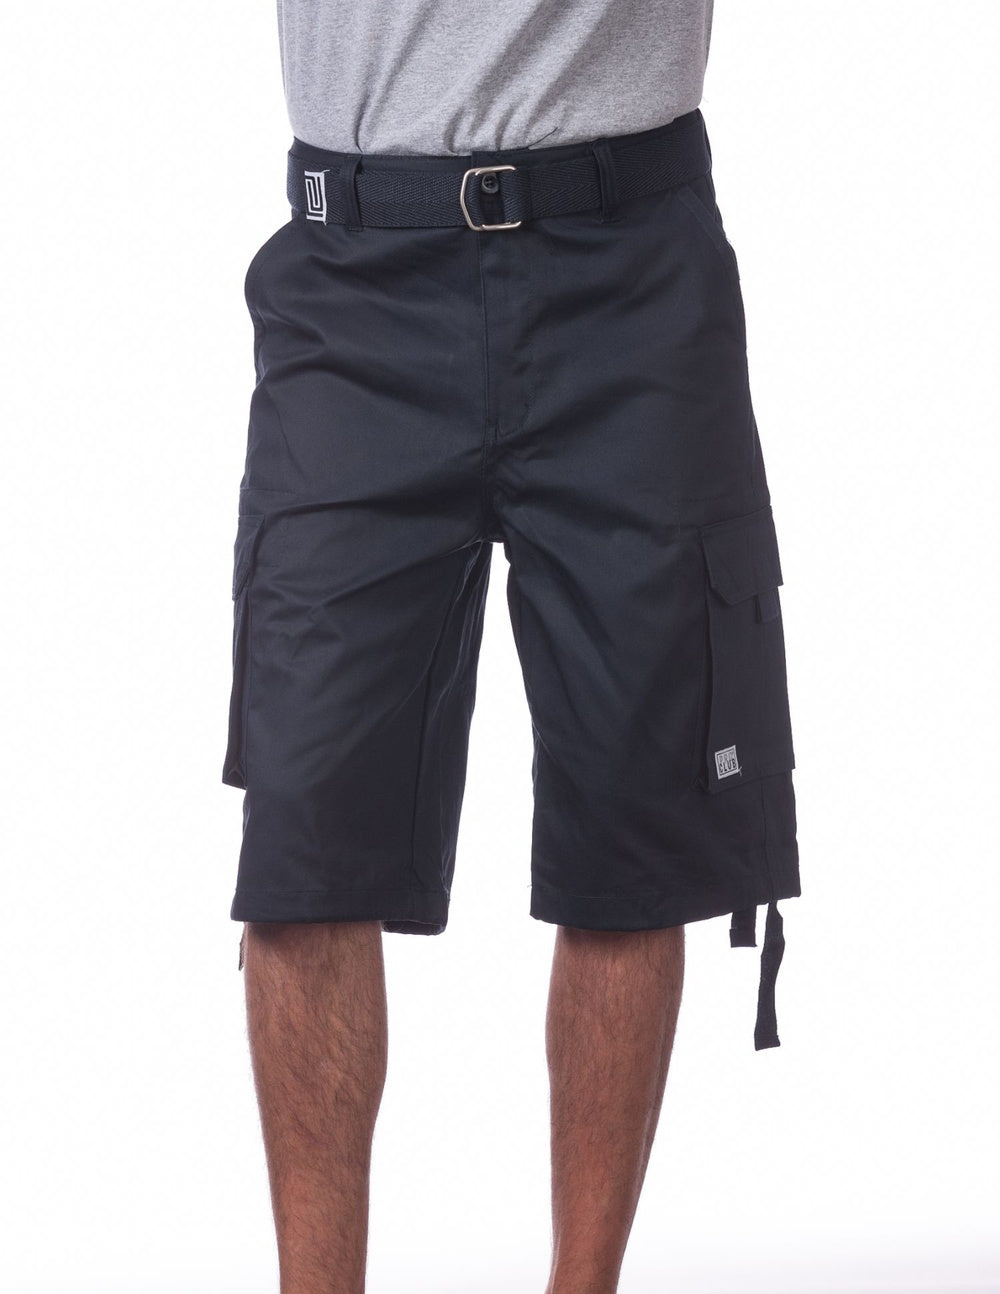 Pro Club Twill Cargo Shorts with Belt - NAVY